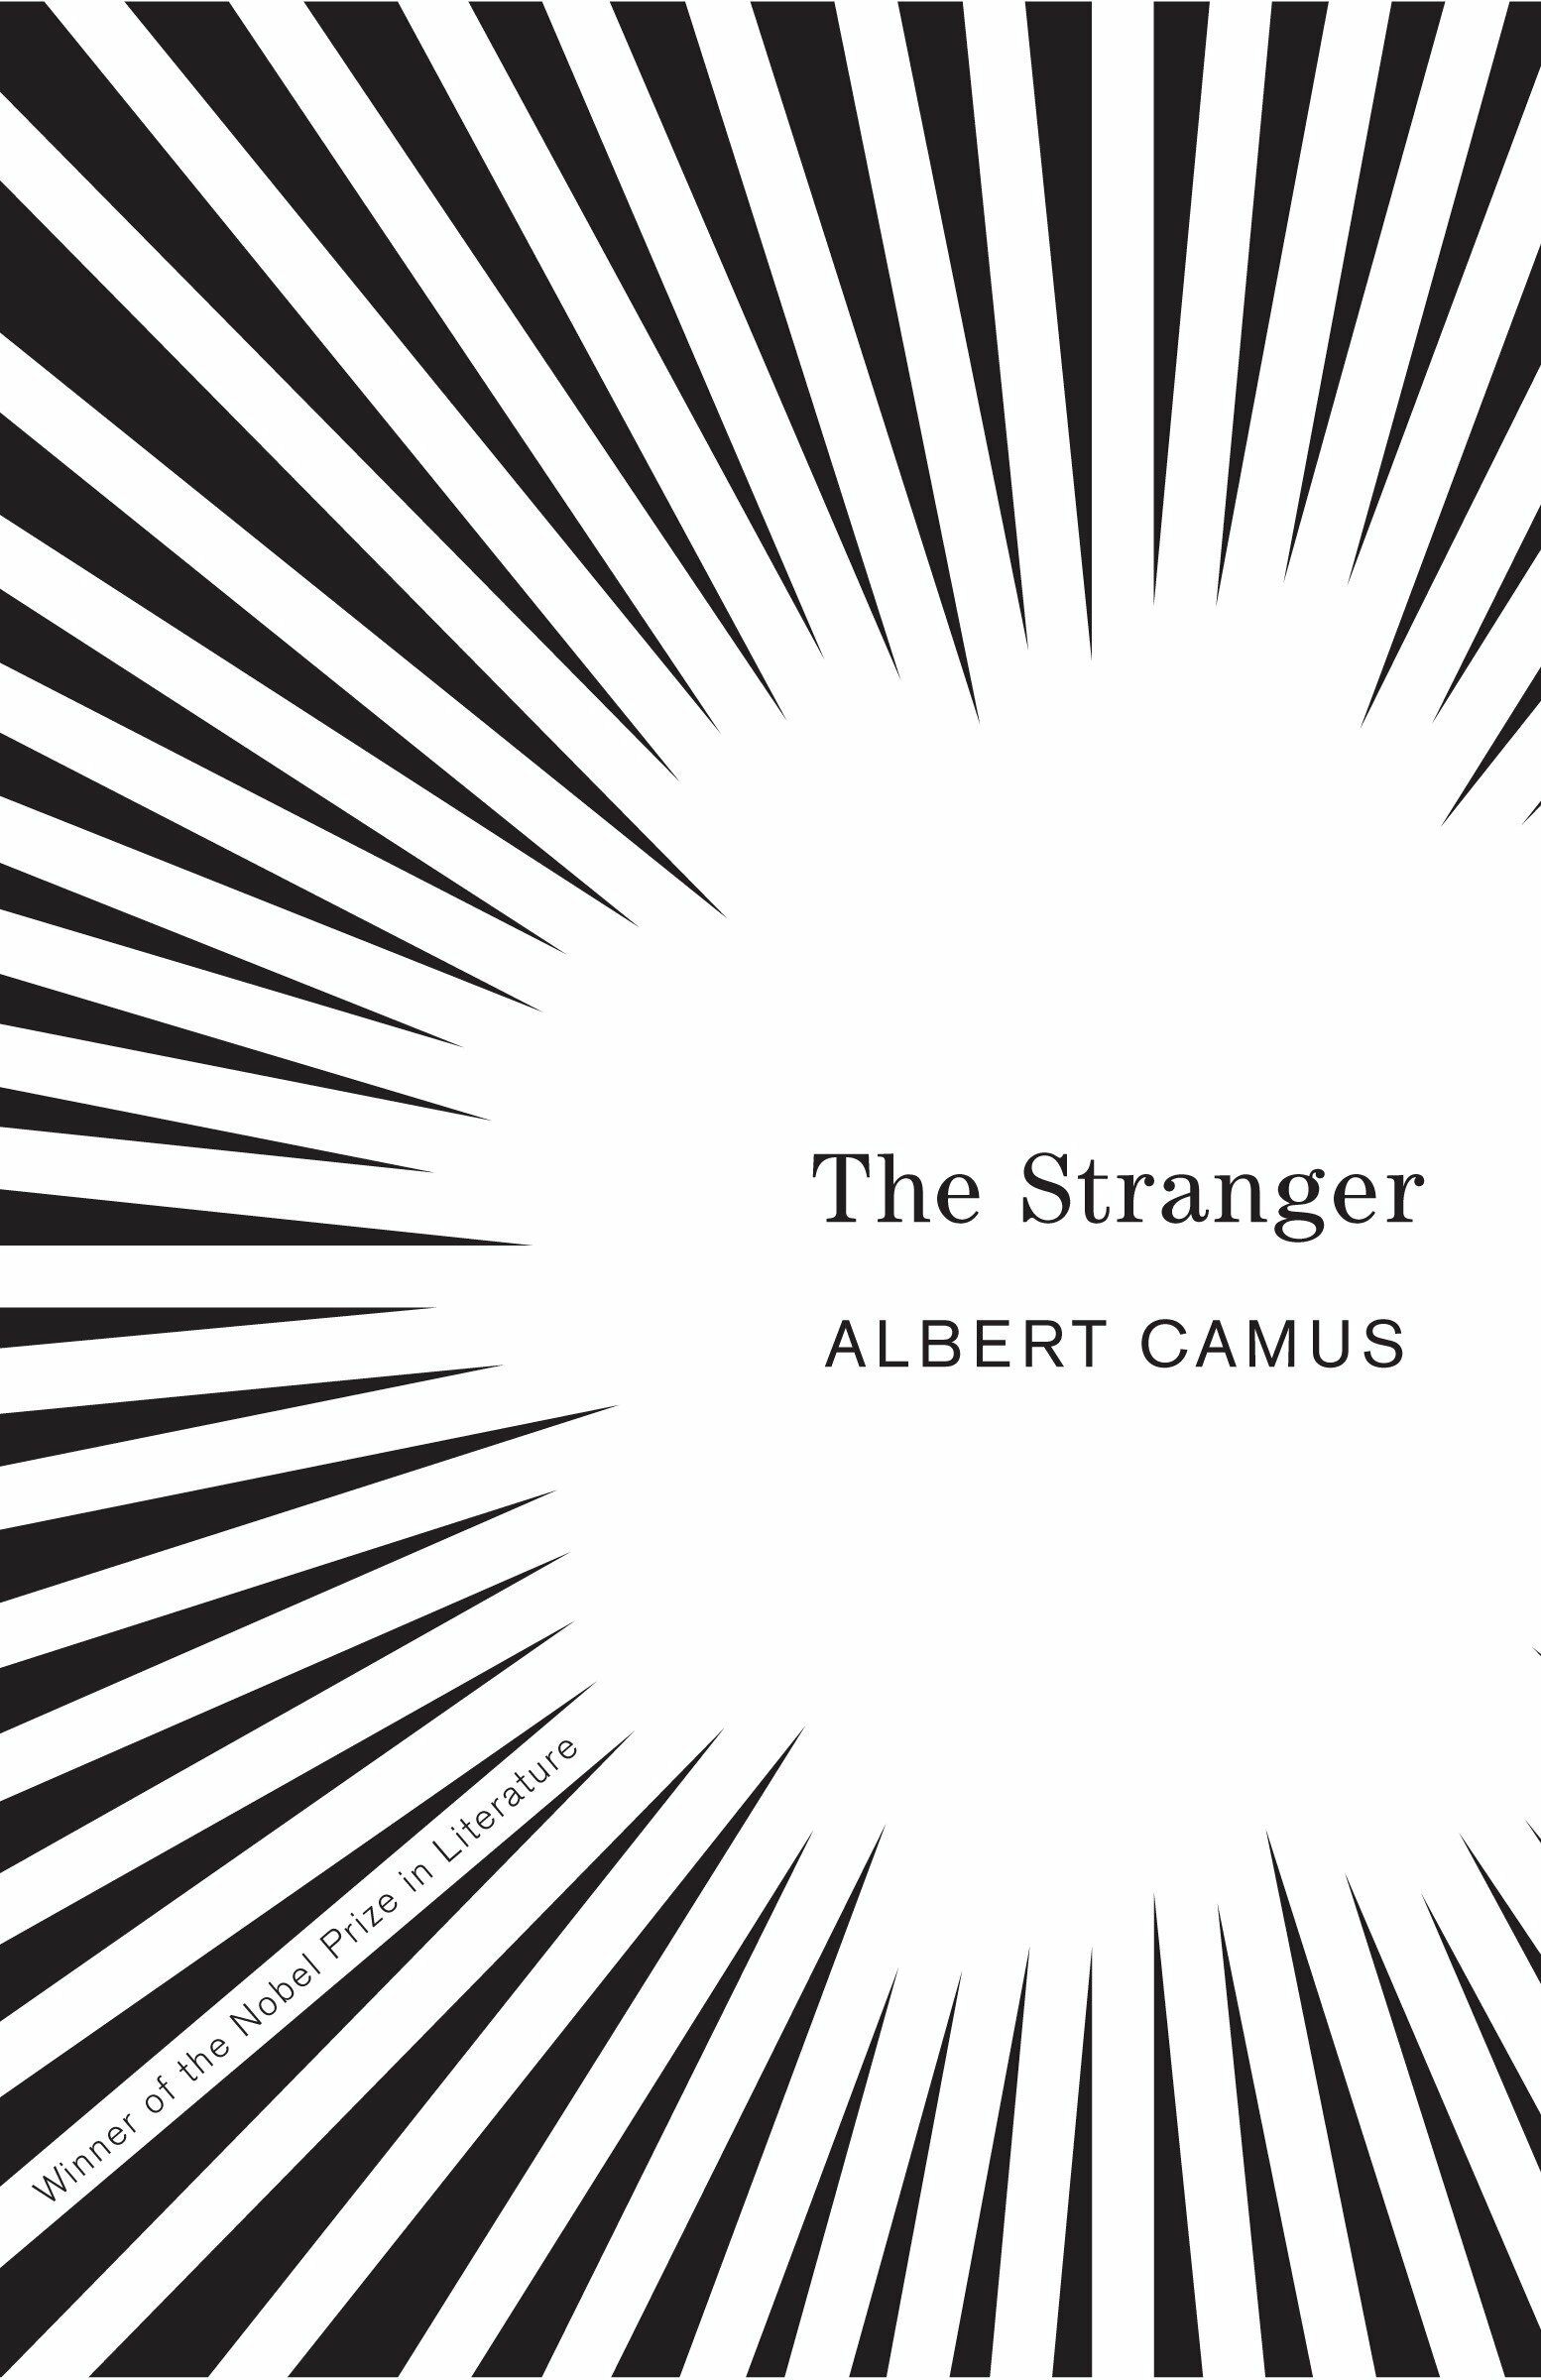 the stranger by Albert Camus (이방인 by 알베르 카뮈)